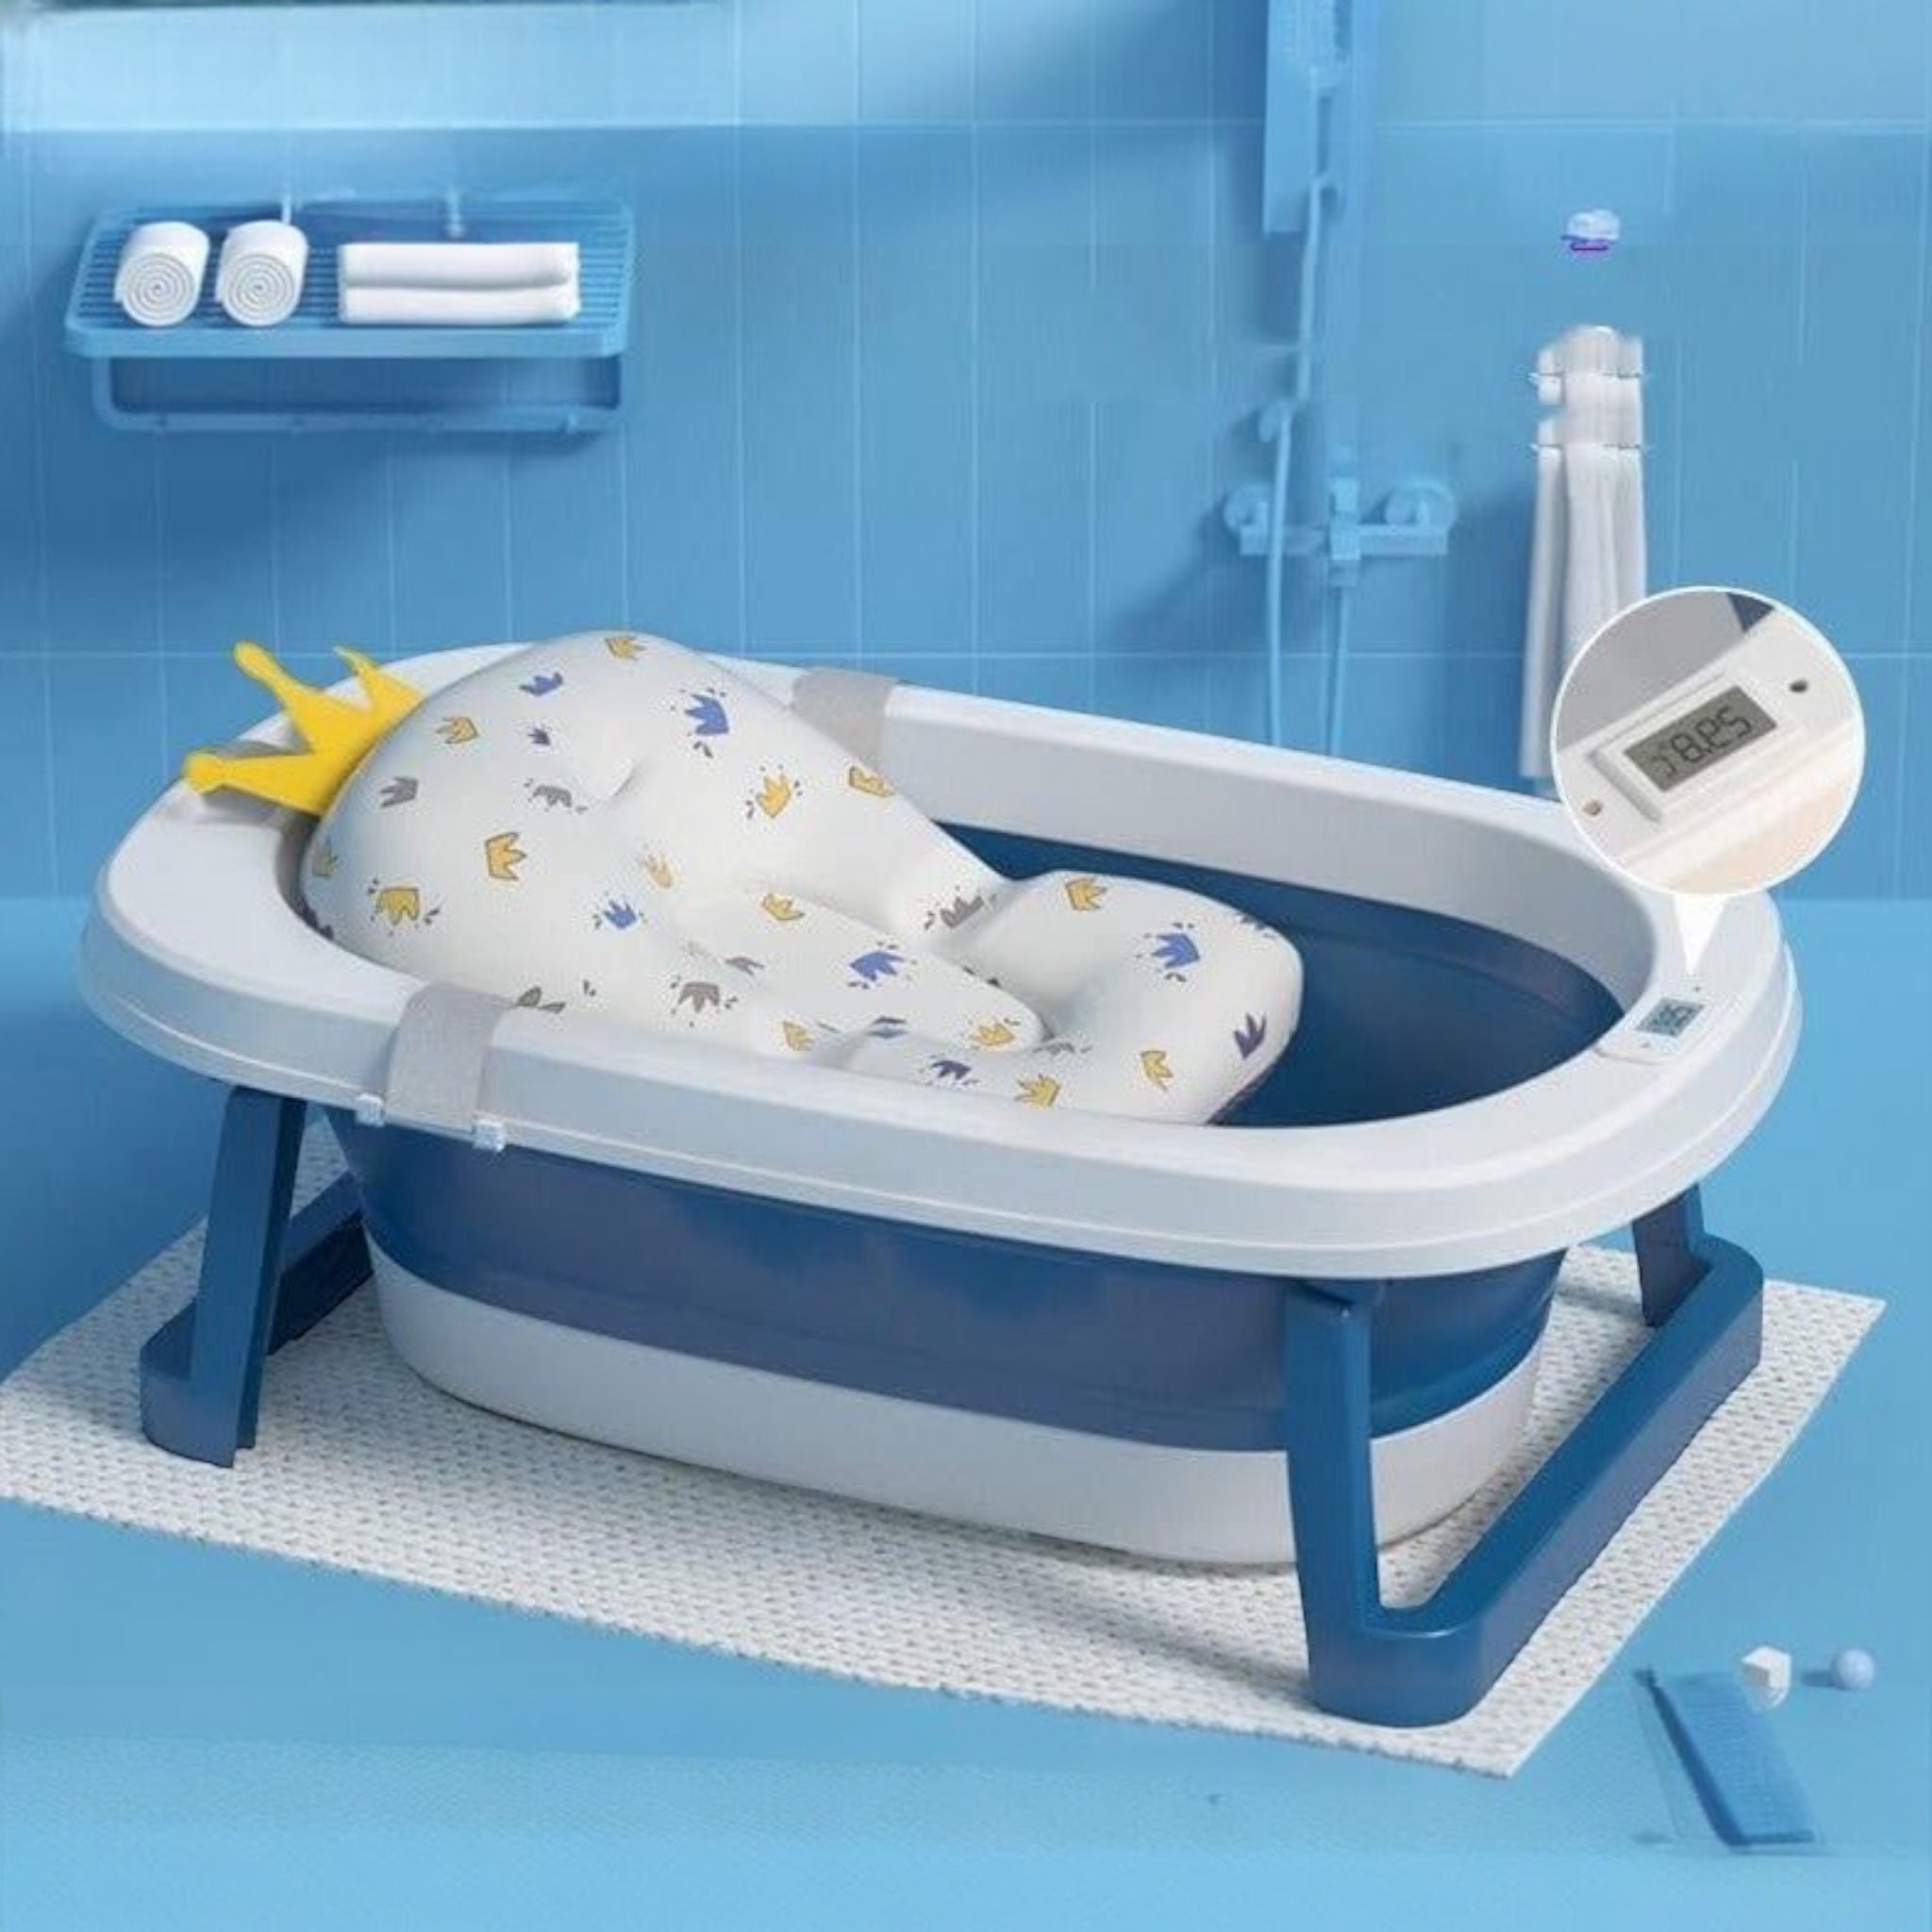 Foldable Bathtub For Newborns,Travel Essential Bathtub With Smart Temperature Detection System